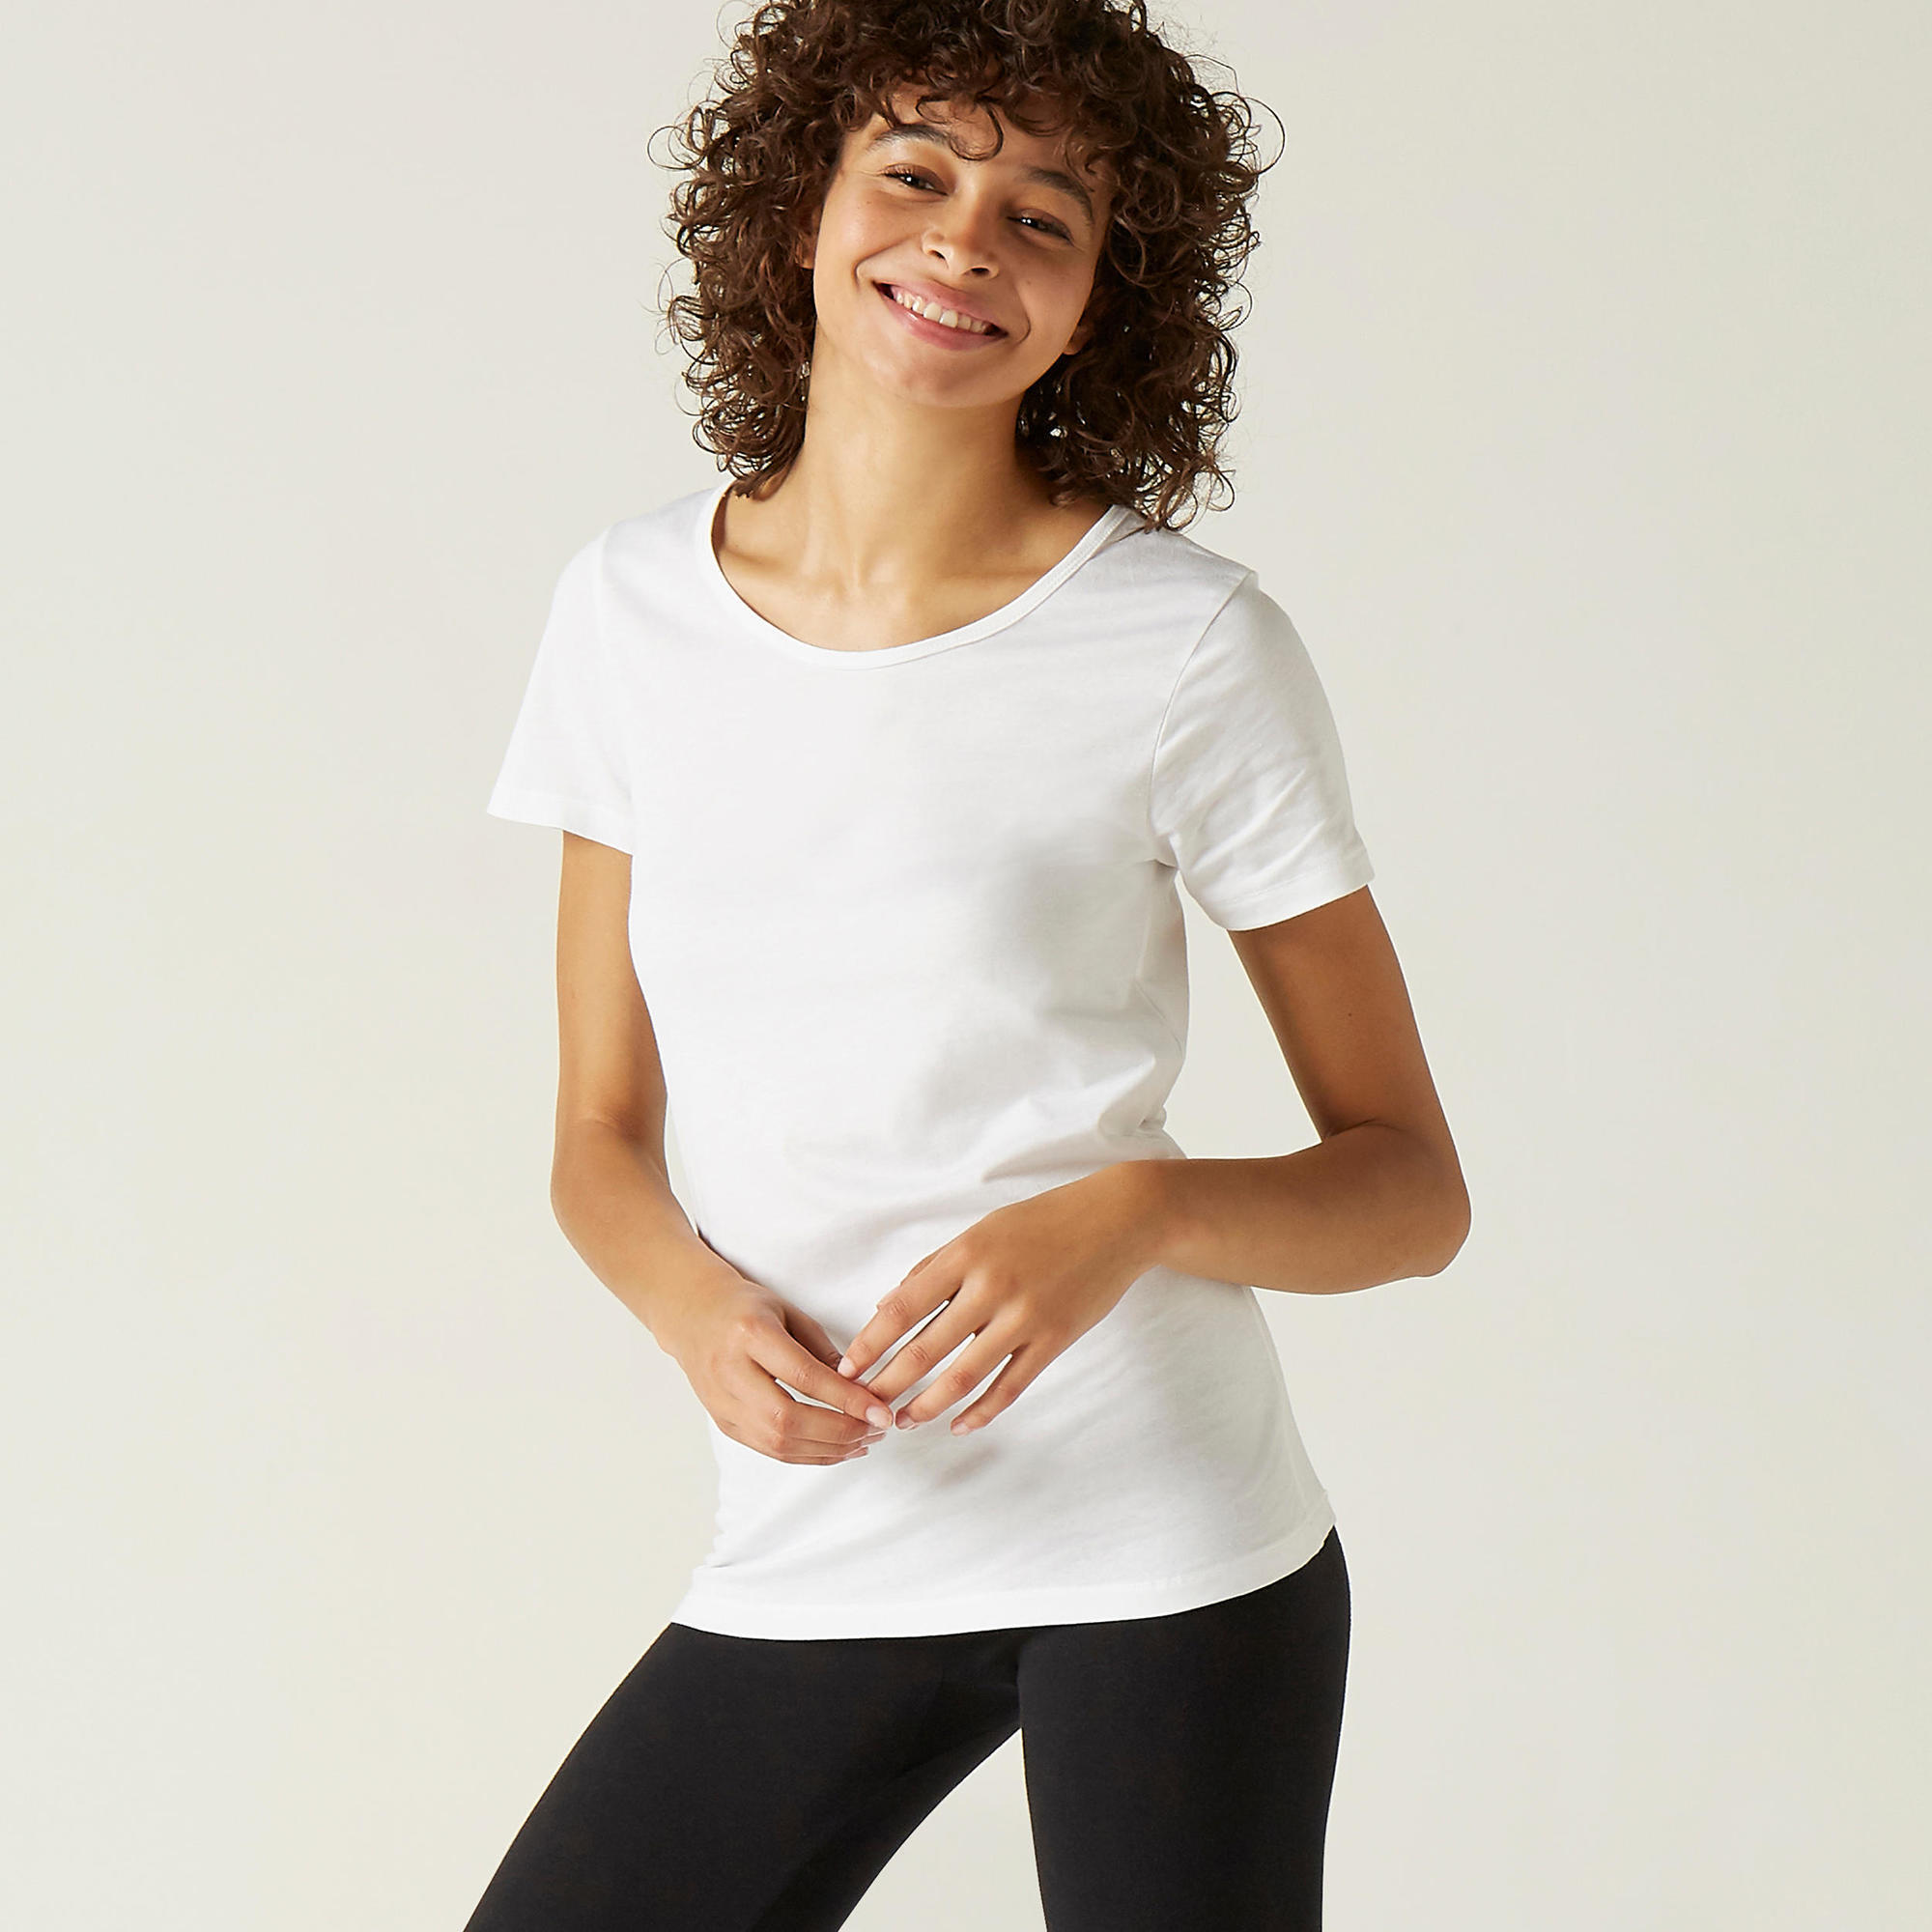 Women's Fitness T-Shirt 100 - White 1/4